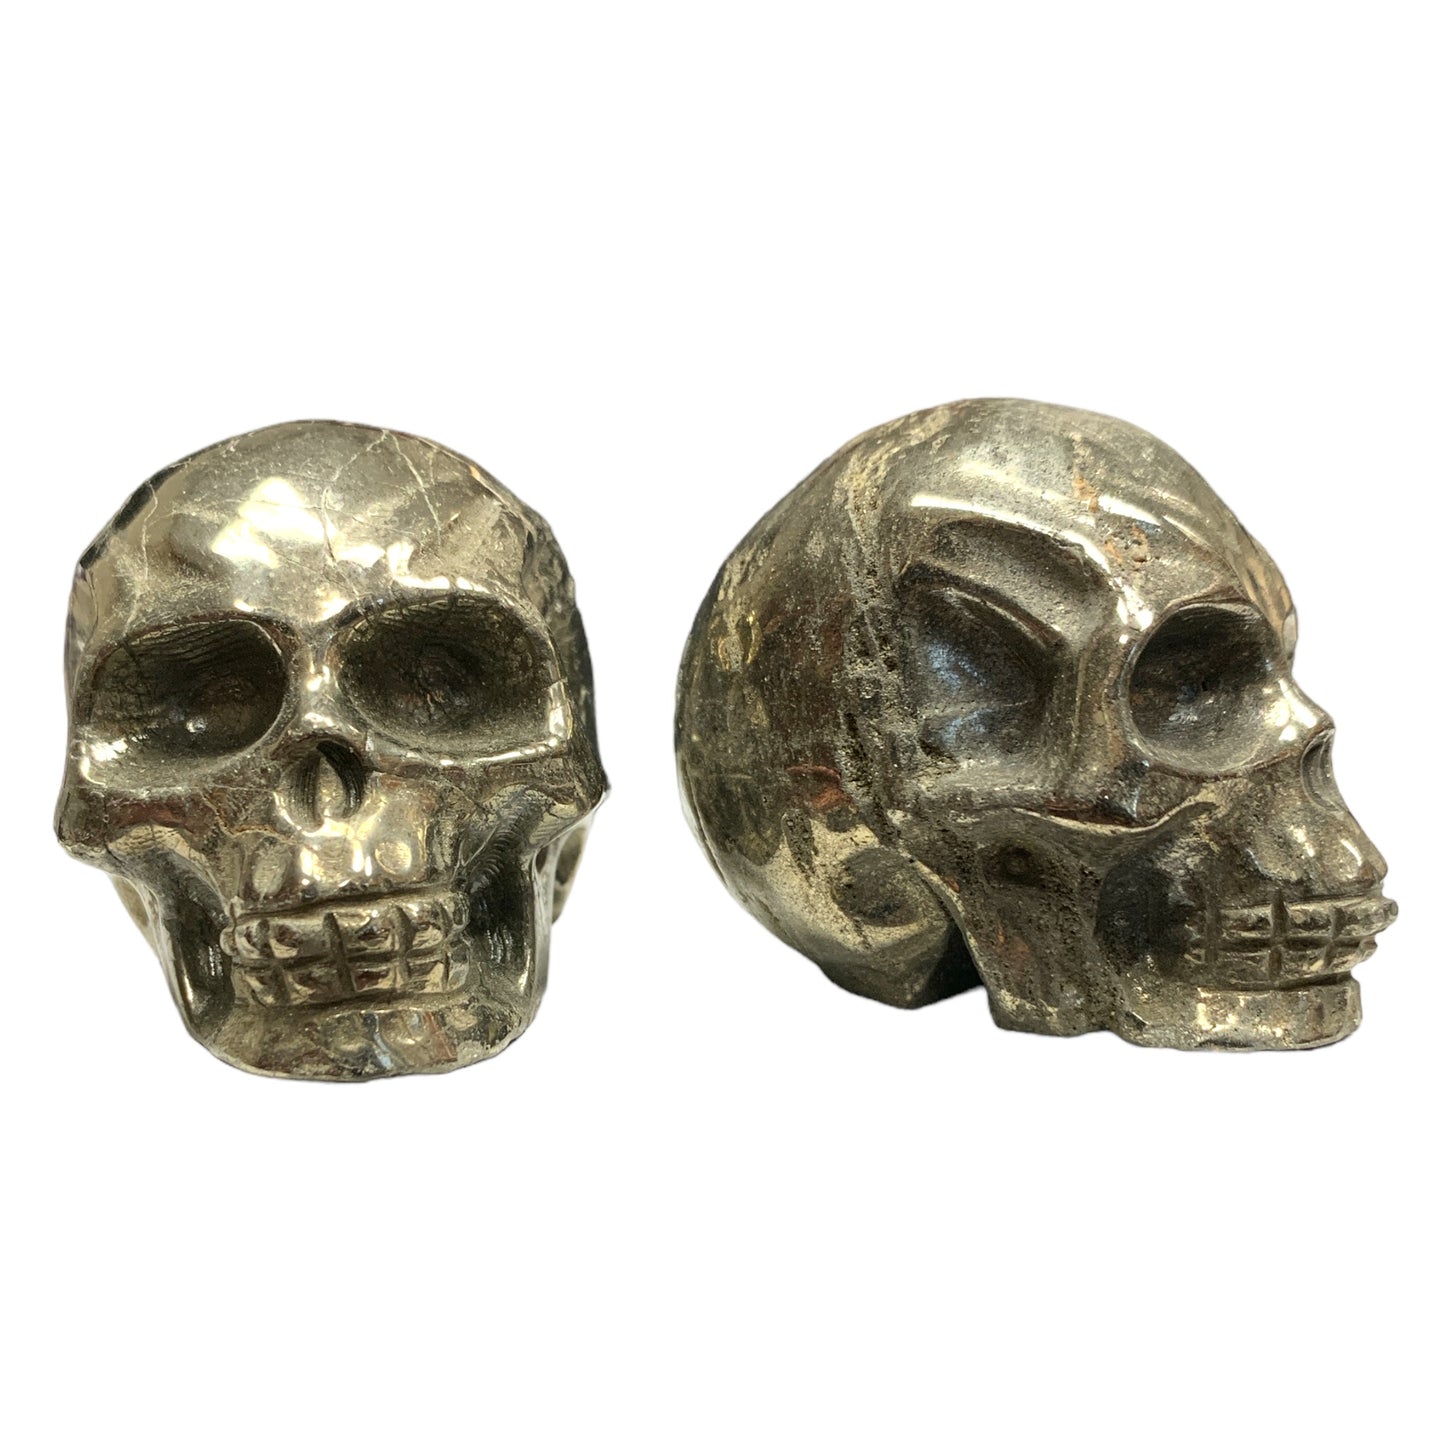 Skull Small - Pyrite - 40x50 mm high - China - NEW722